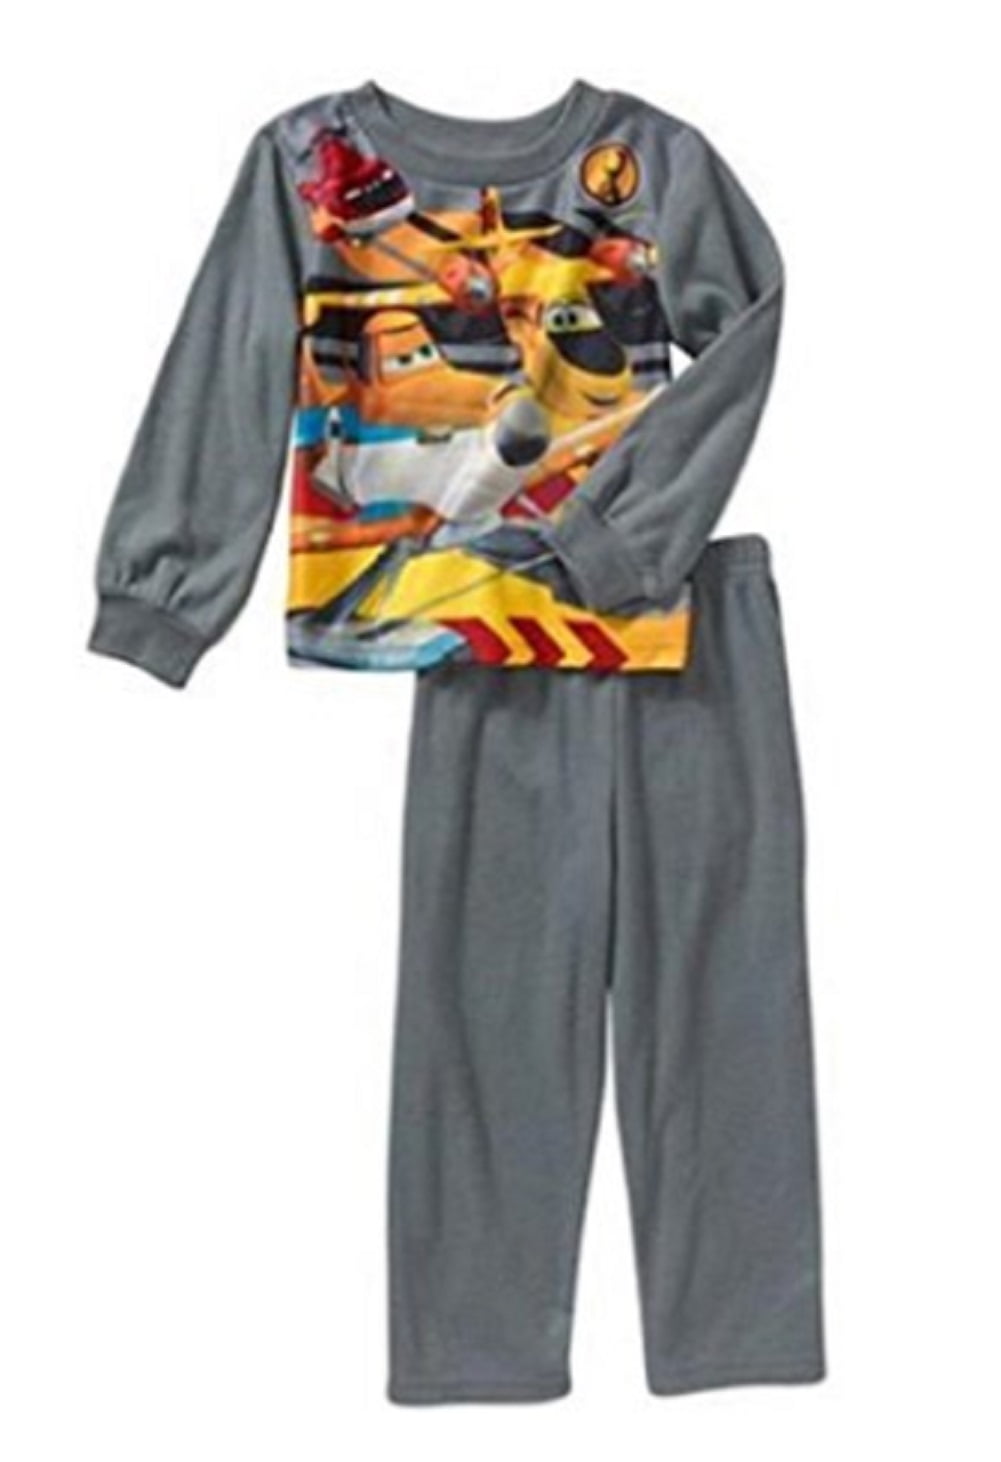 Disney Store Authentic Planes Fire & Rescue Pajama Set Boys Size 3 Toddler PJs